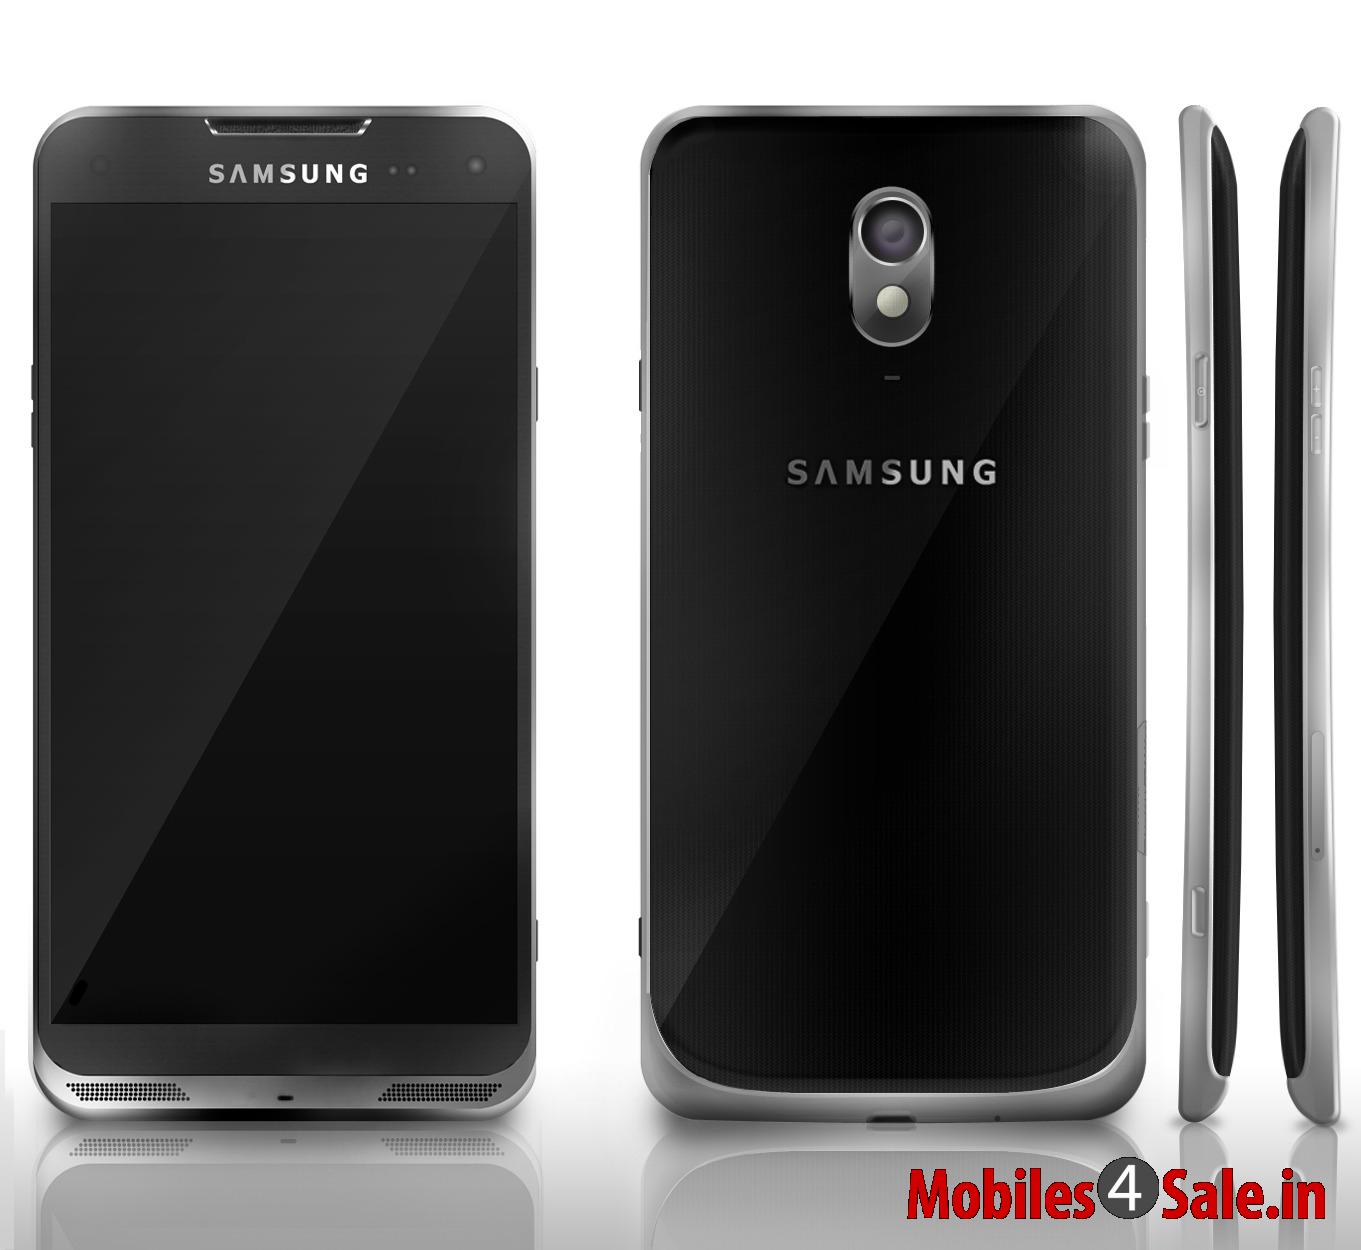 Samsung Galaxy S5 Rumours